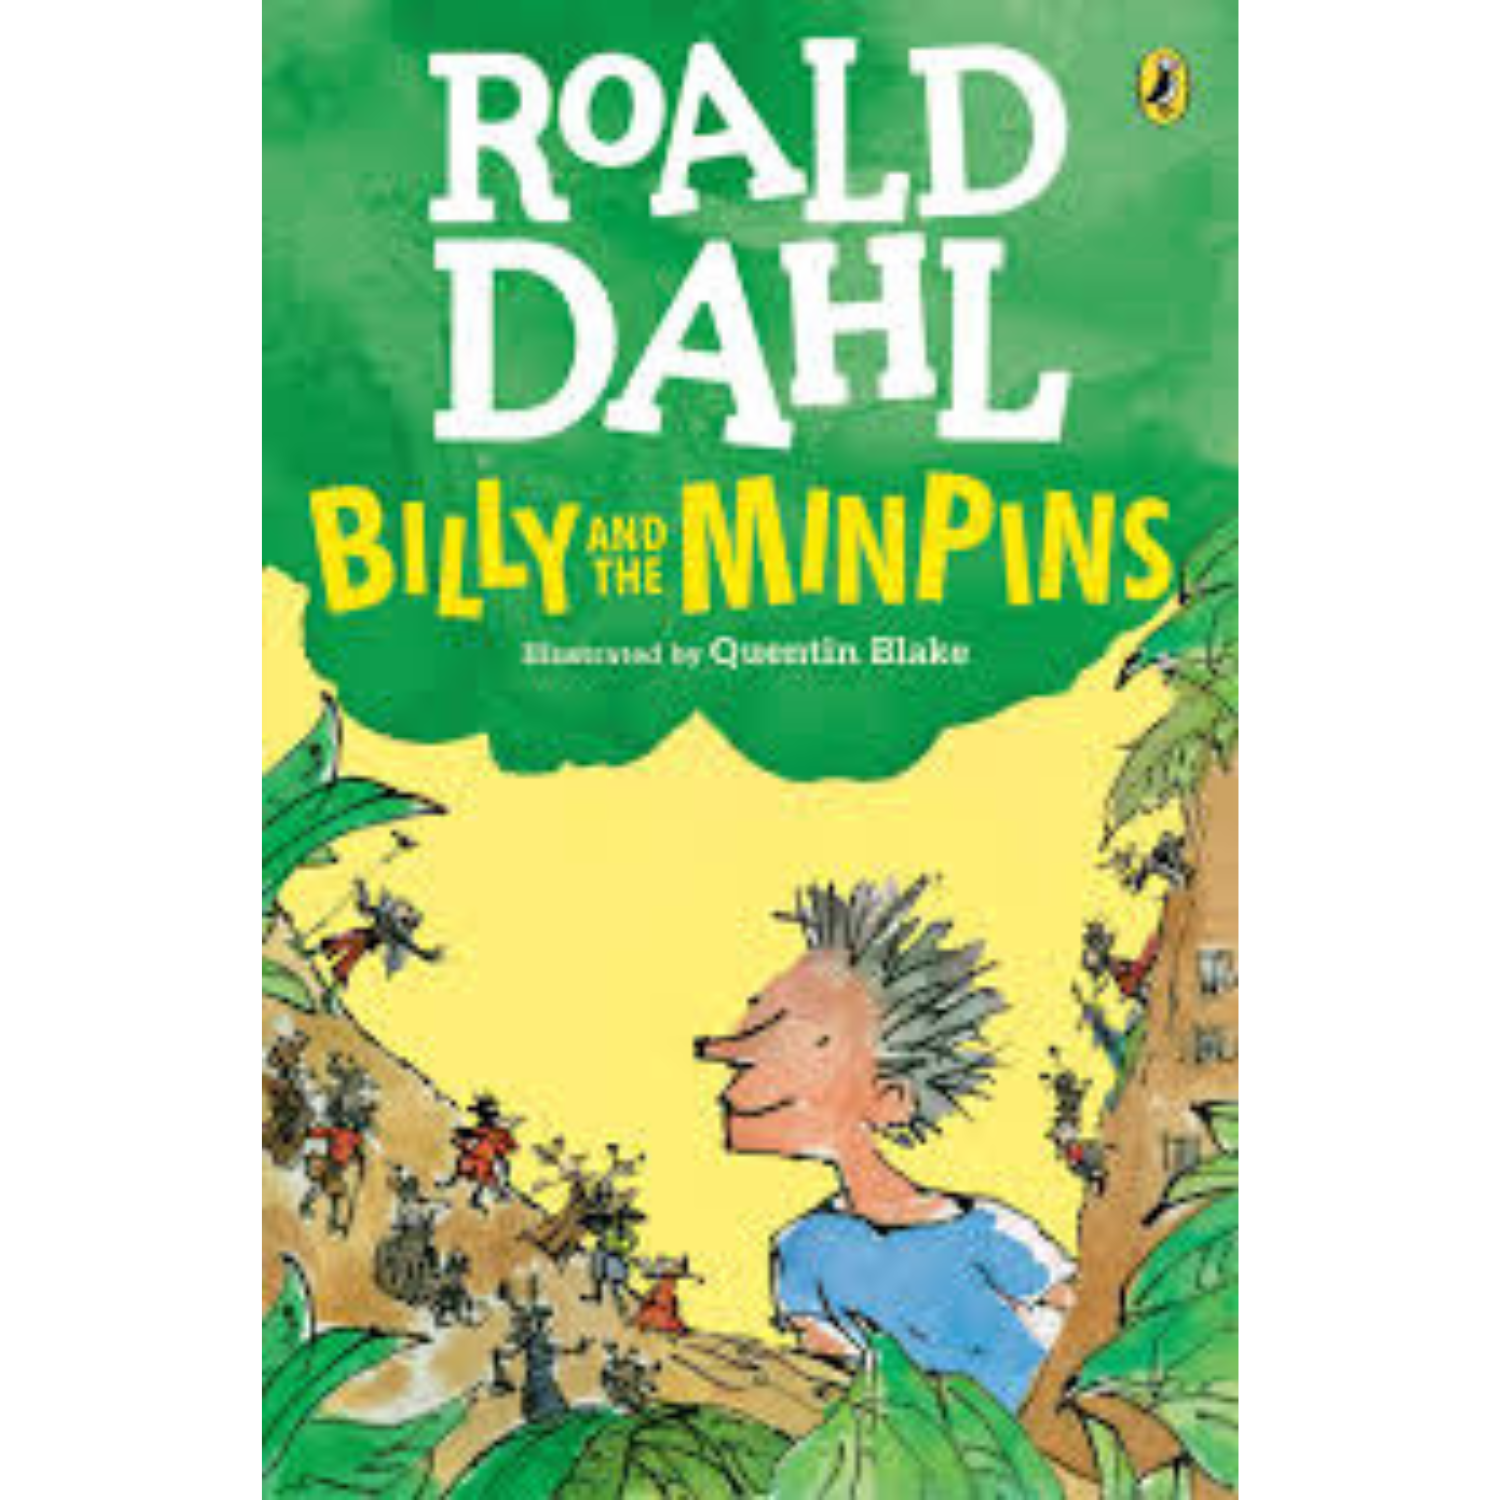 Libro en inglés Billy and the Minpins